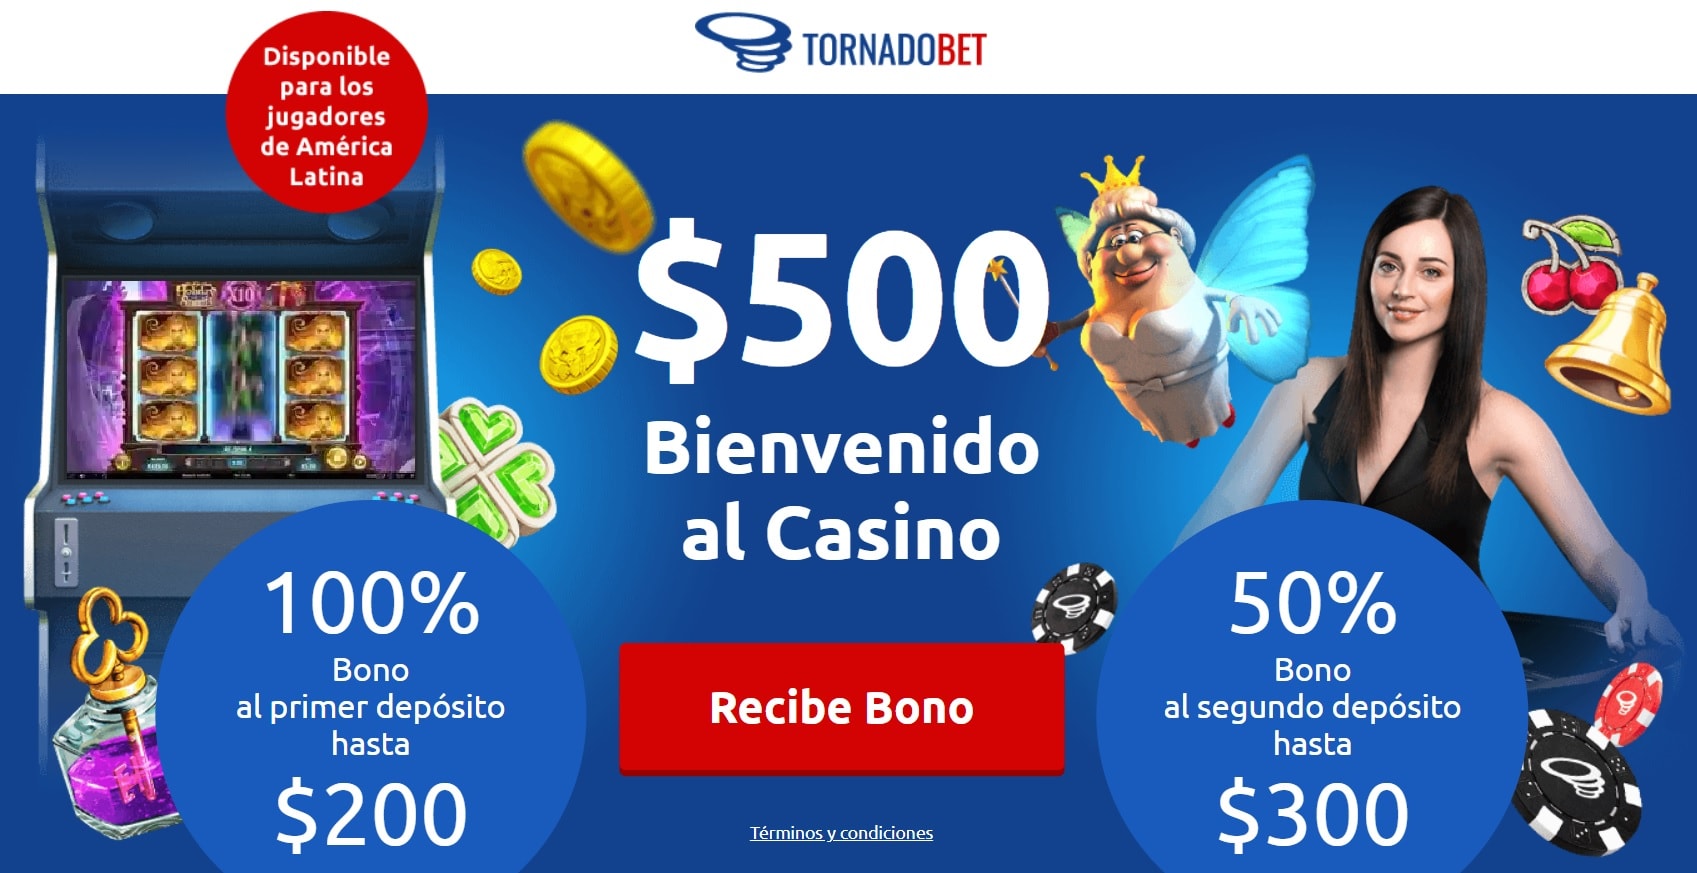 casinos online colombia tornadobet